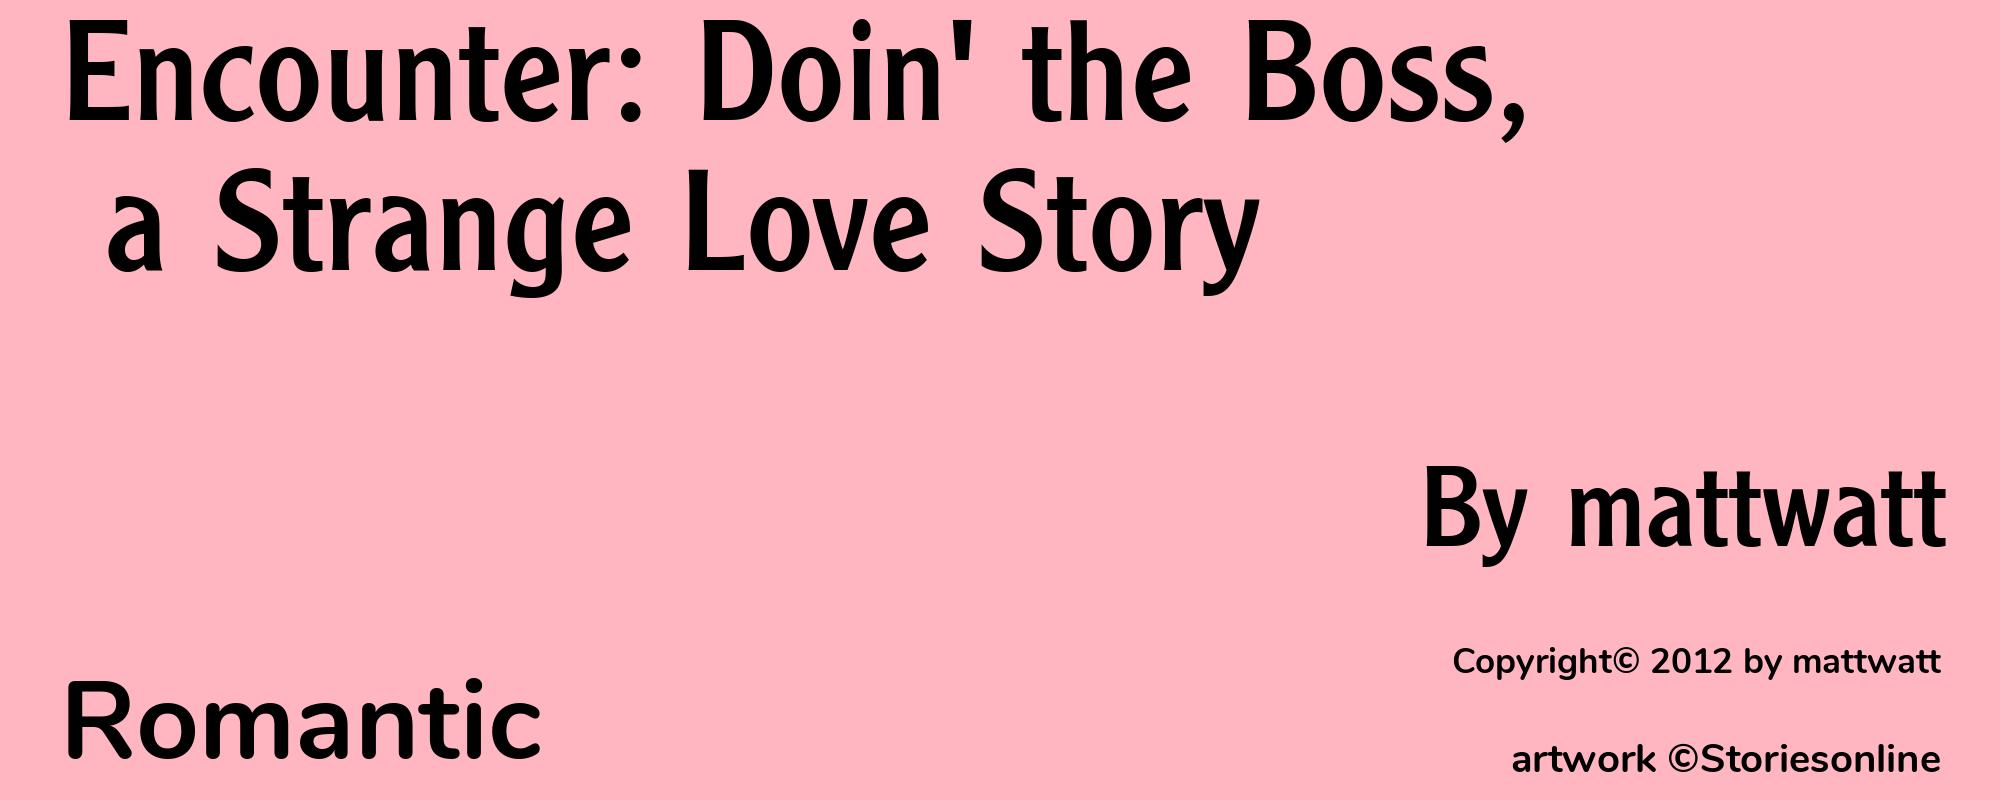 Encounter: Doin' the Boss, a Strange Love Story - Cover